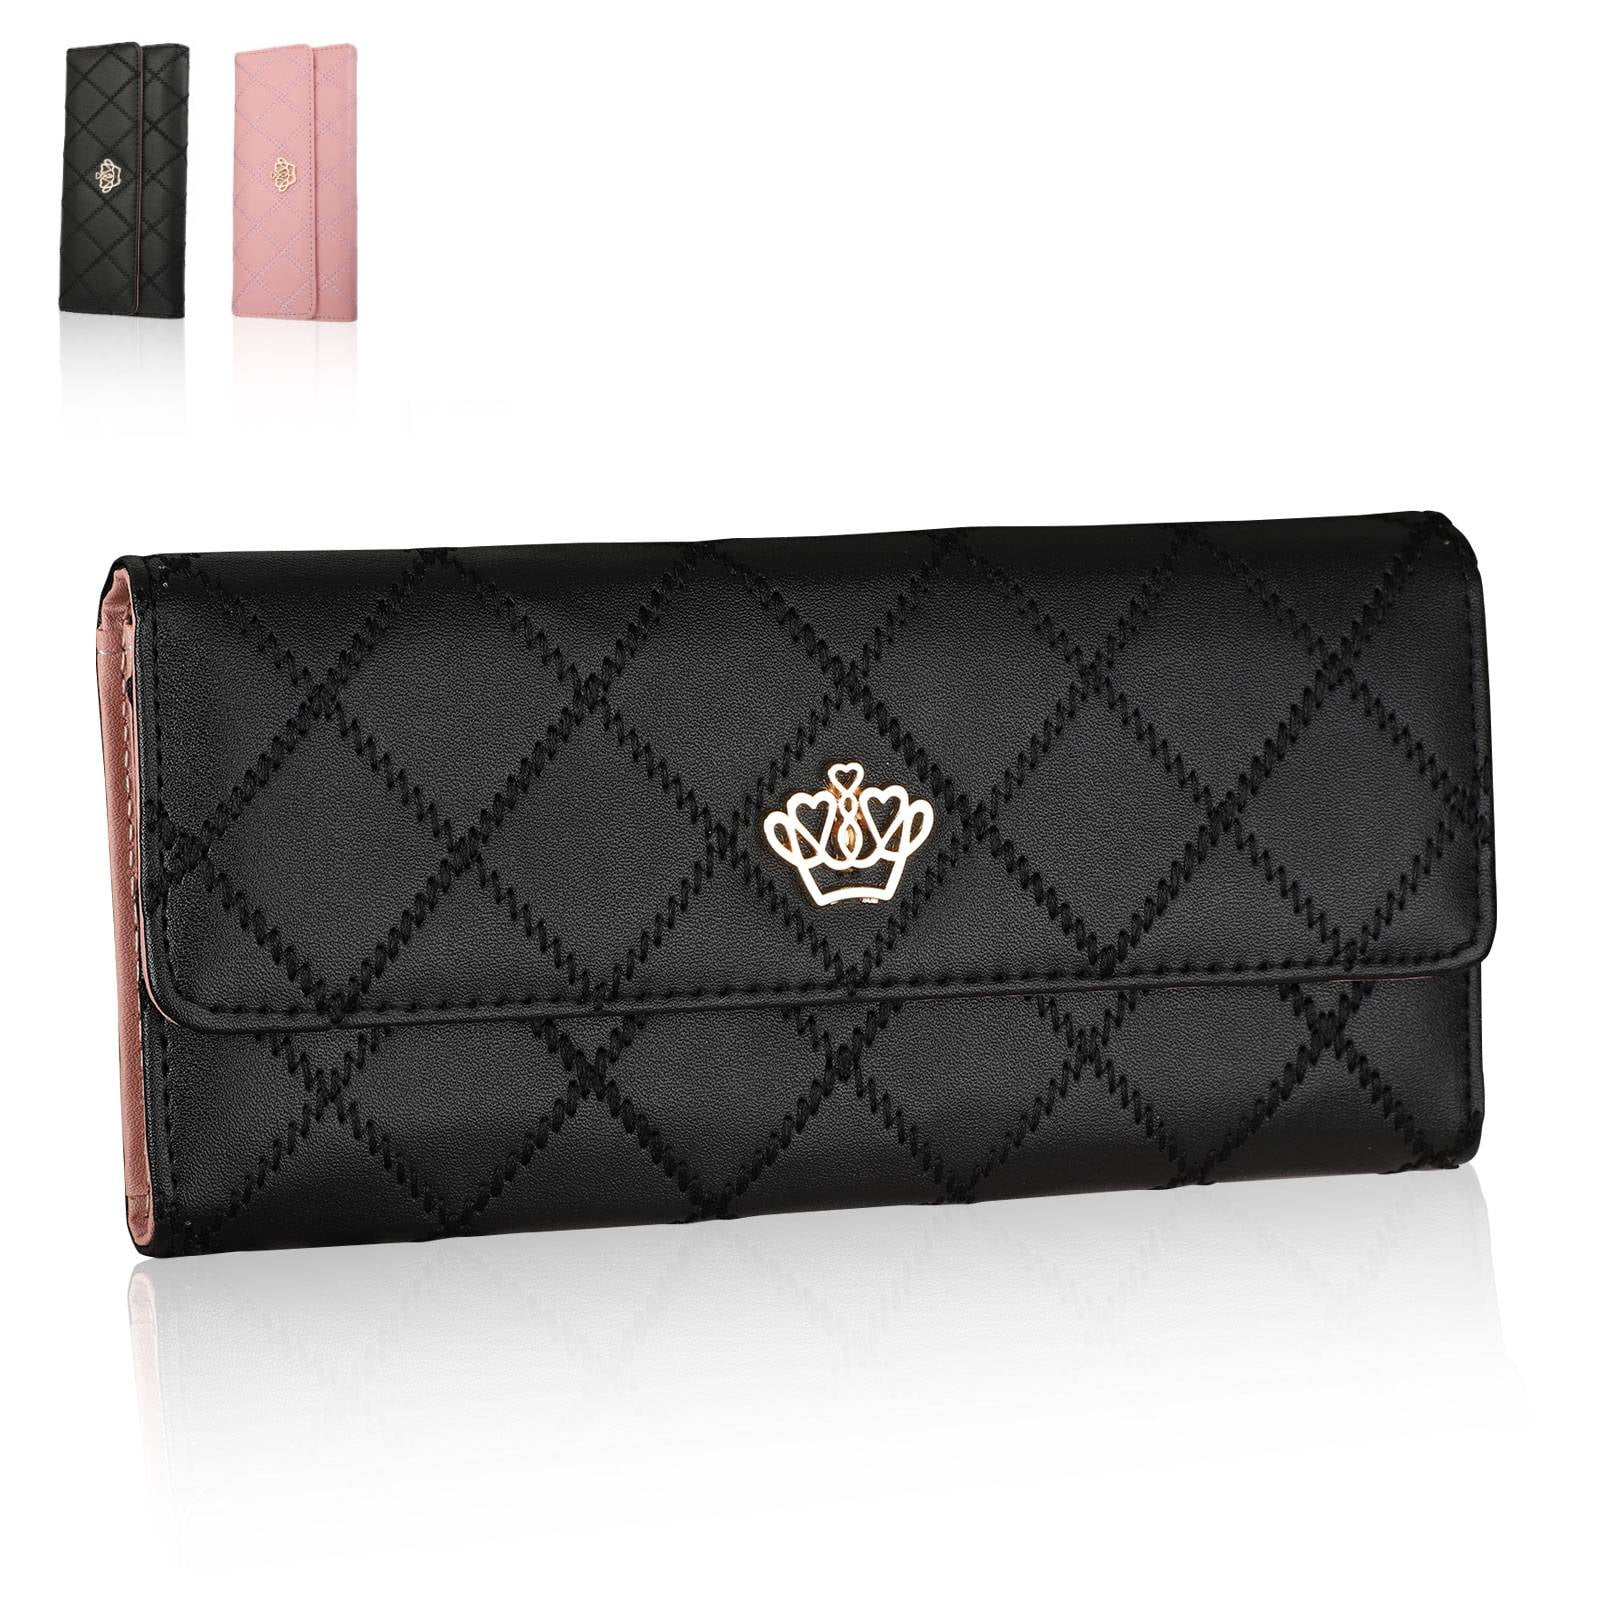 Leather Wallet for Women Slim Clutch Long Designer Trifold Ladies Credit Card Holder Organizer 